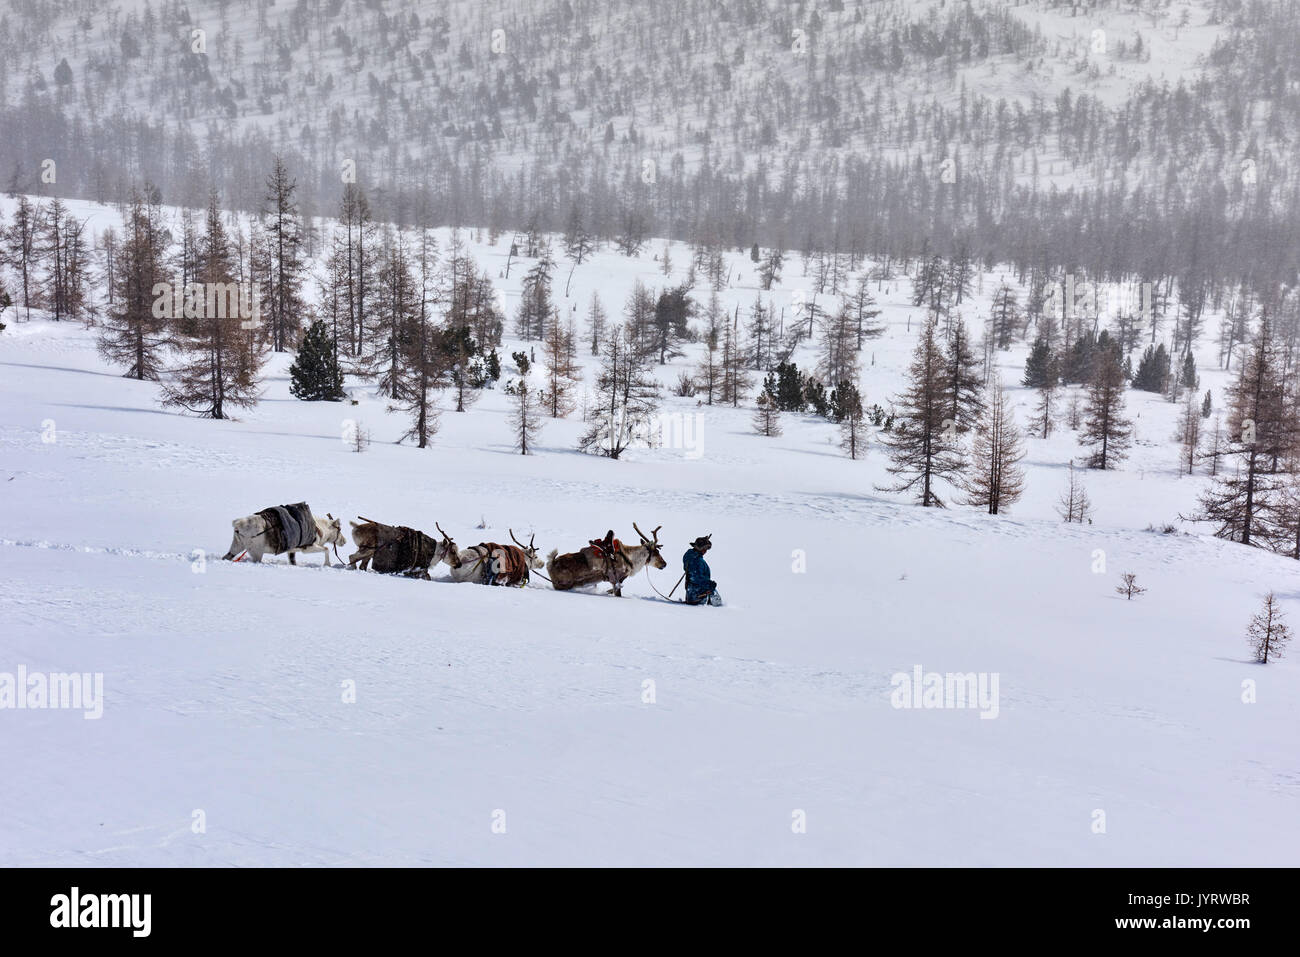 Mongolia, Khovsgol privince, the Tsaatan, reindeer herder, winter migration Stock Photo